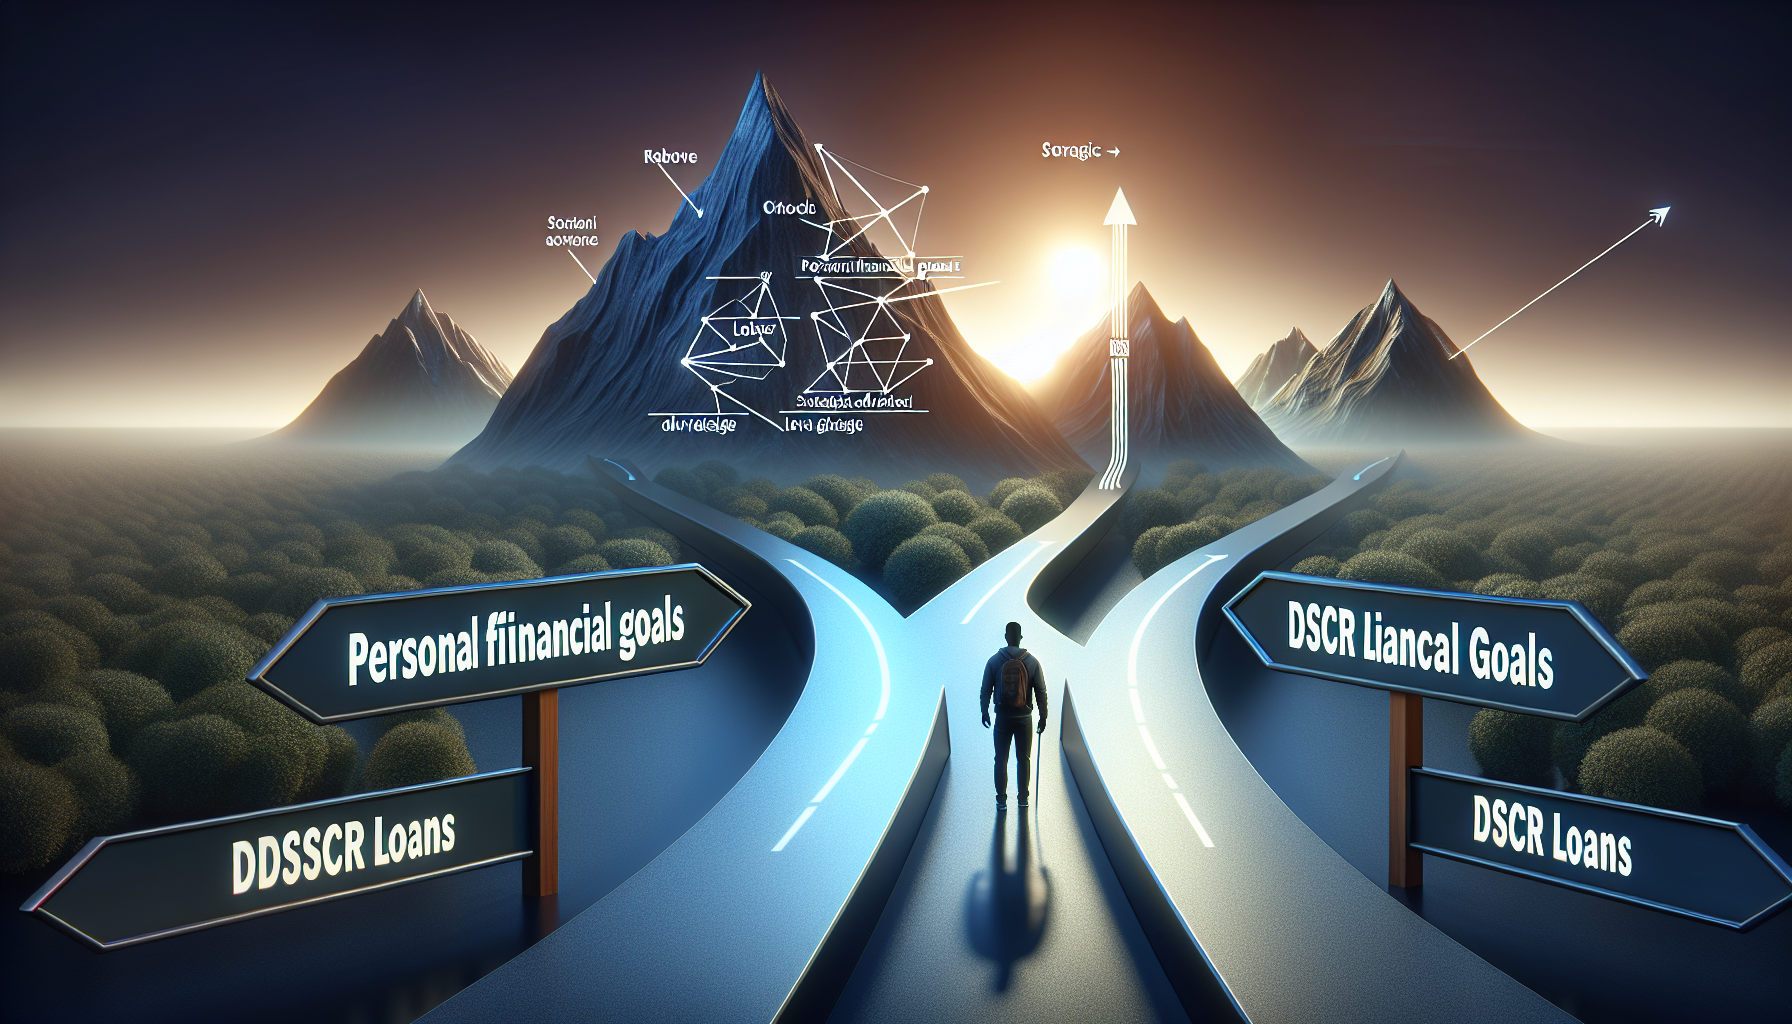 Visual representation of financial goals and loan choices